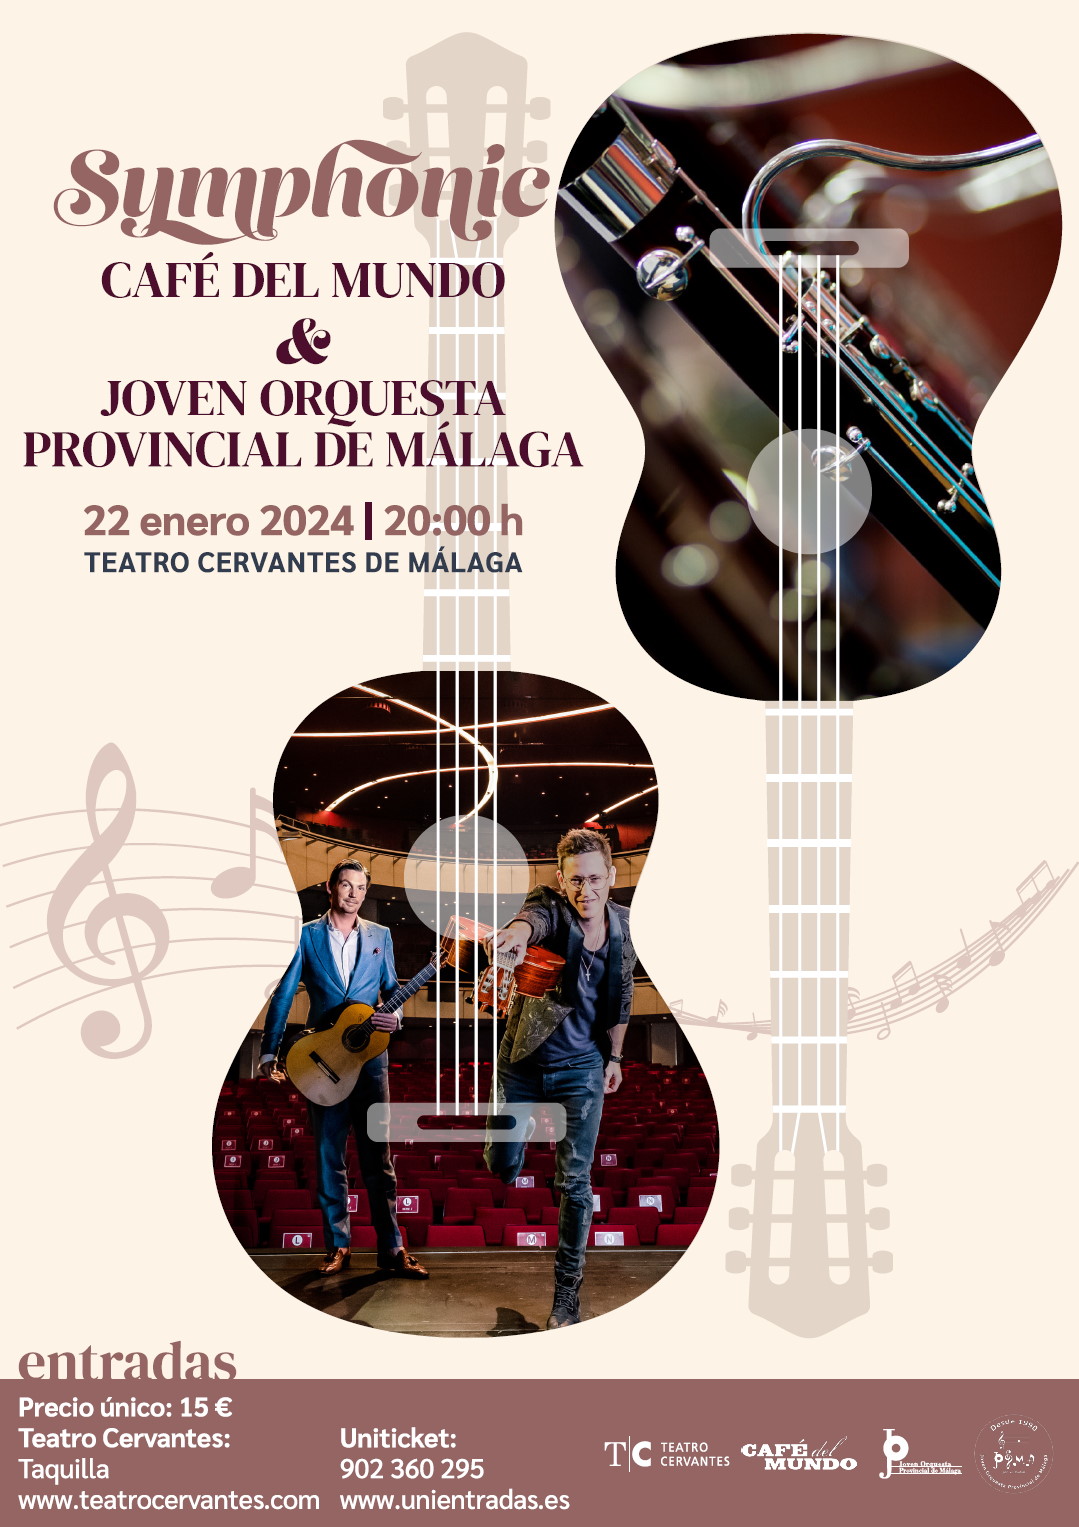 Cafe del Mundo - Symphonic